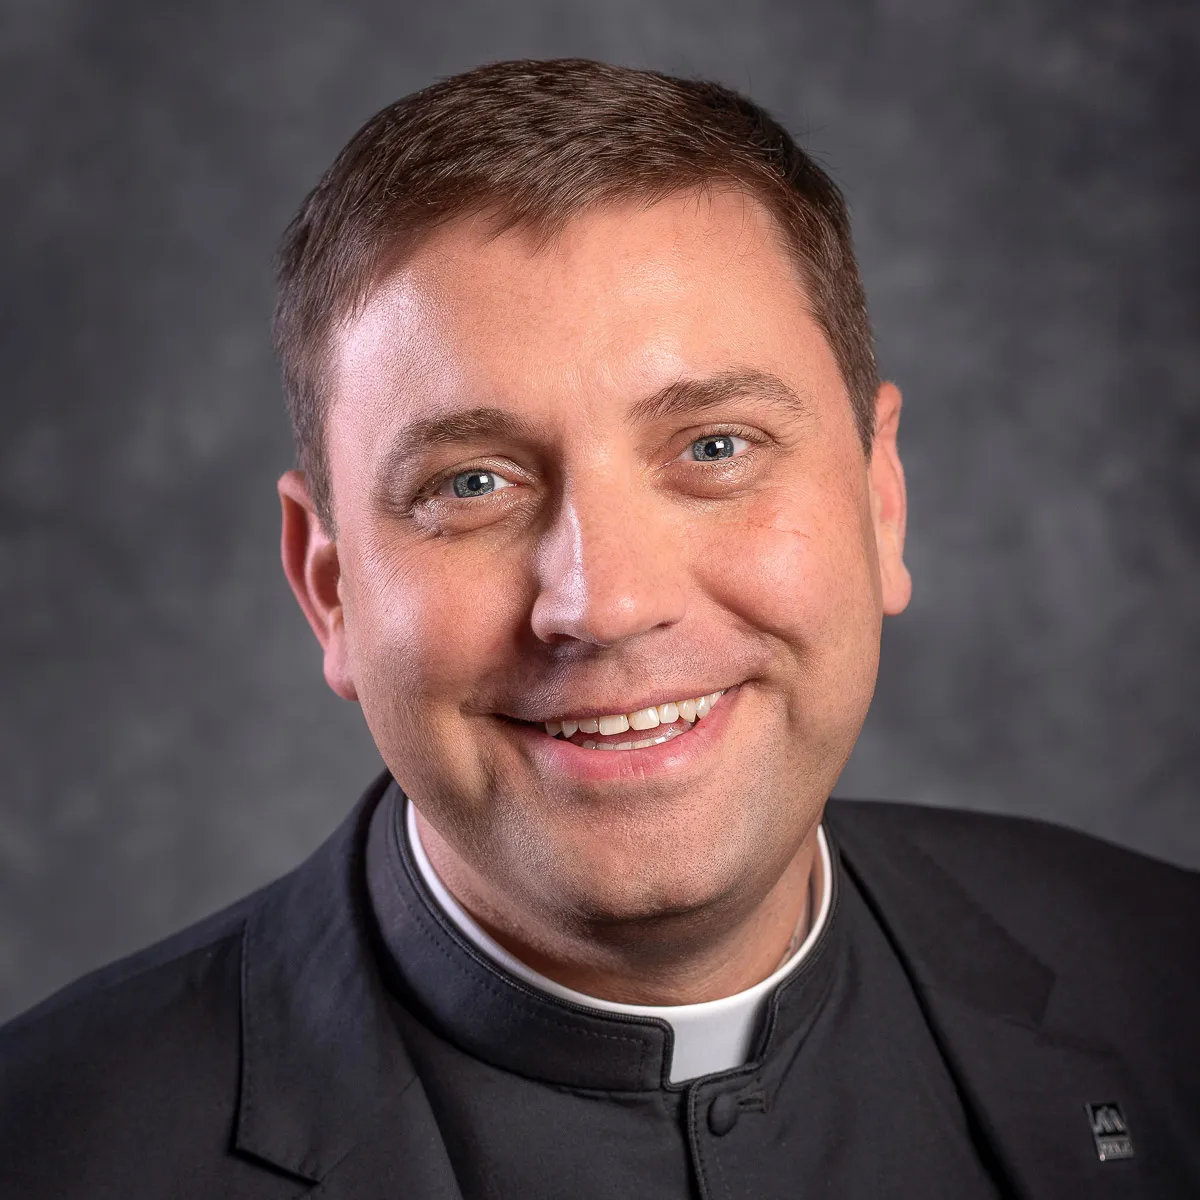 Profile photo of Monsignor James Shea.